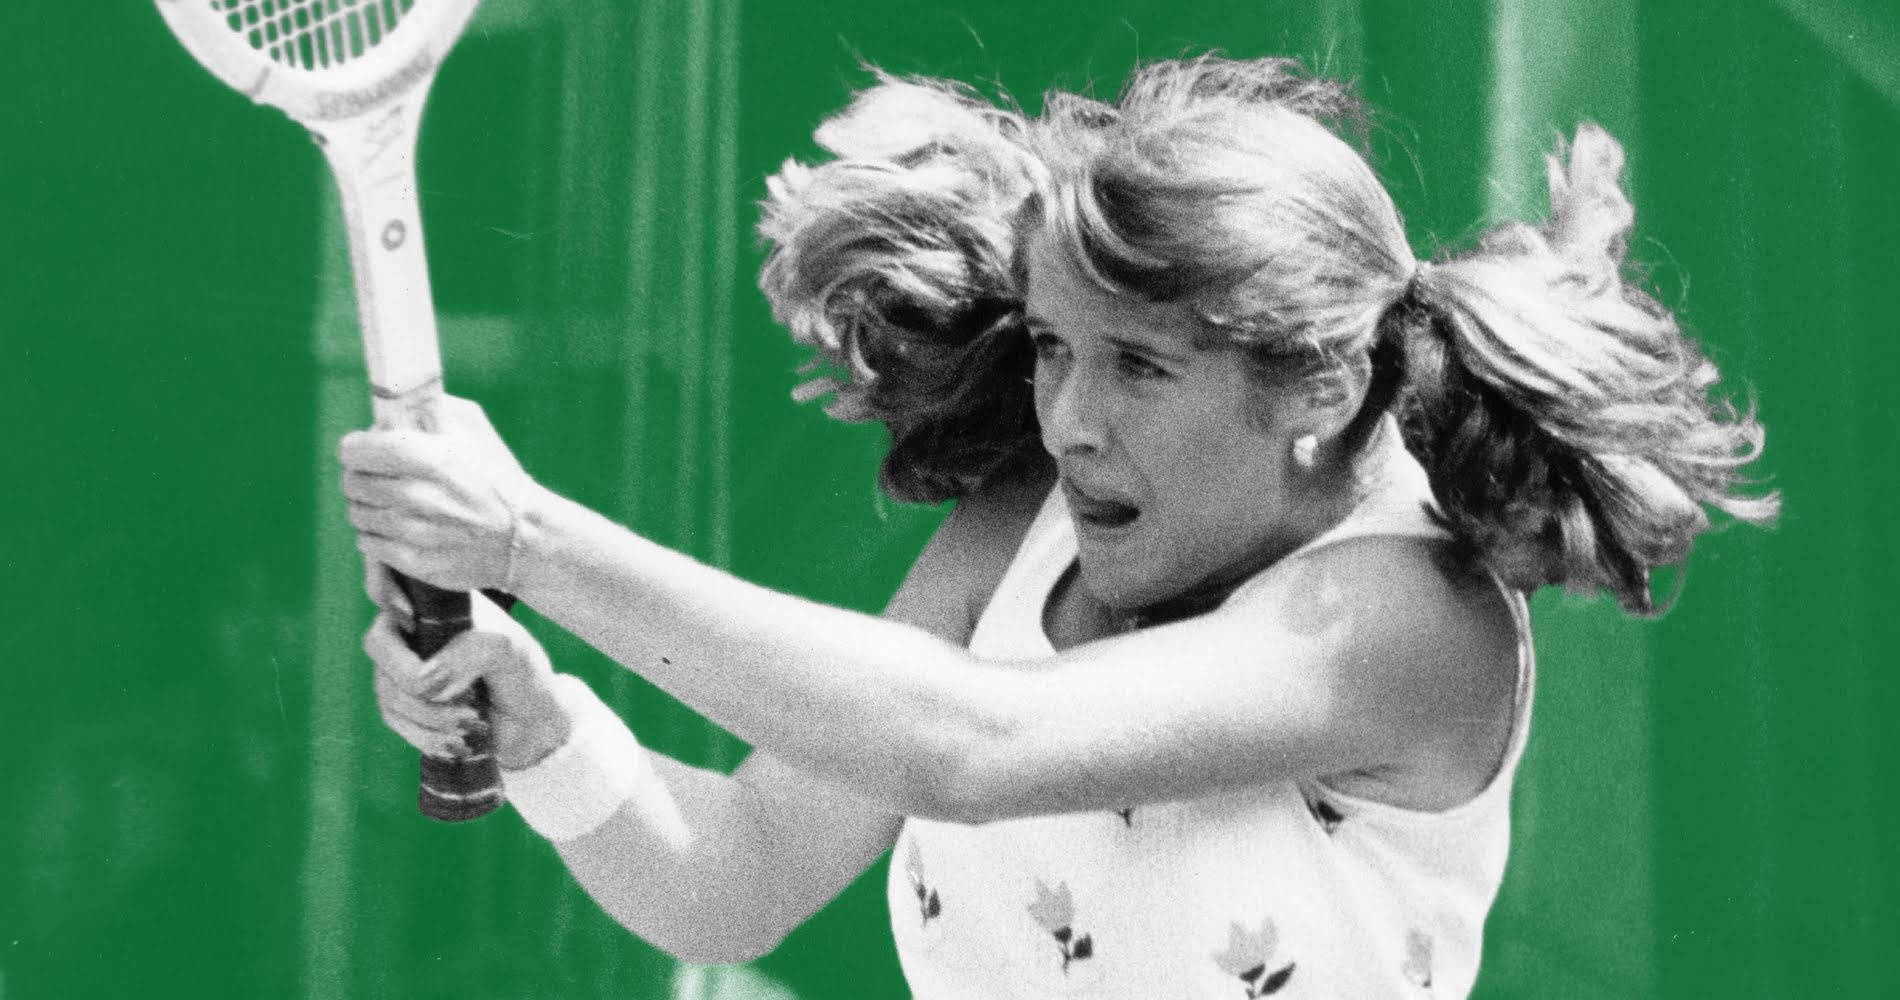 Caption: Tennis legend Tracy Austin against a striking green backdrop. Wallpaper